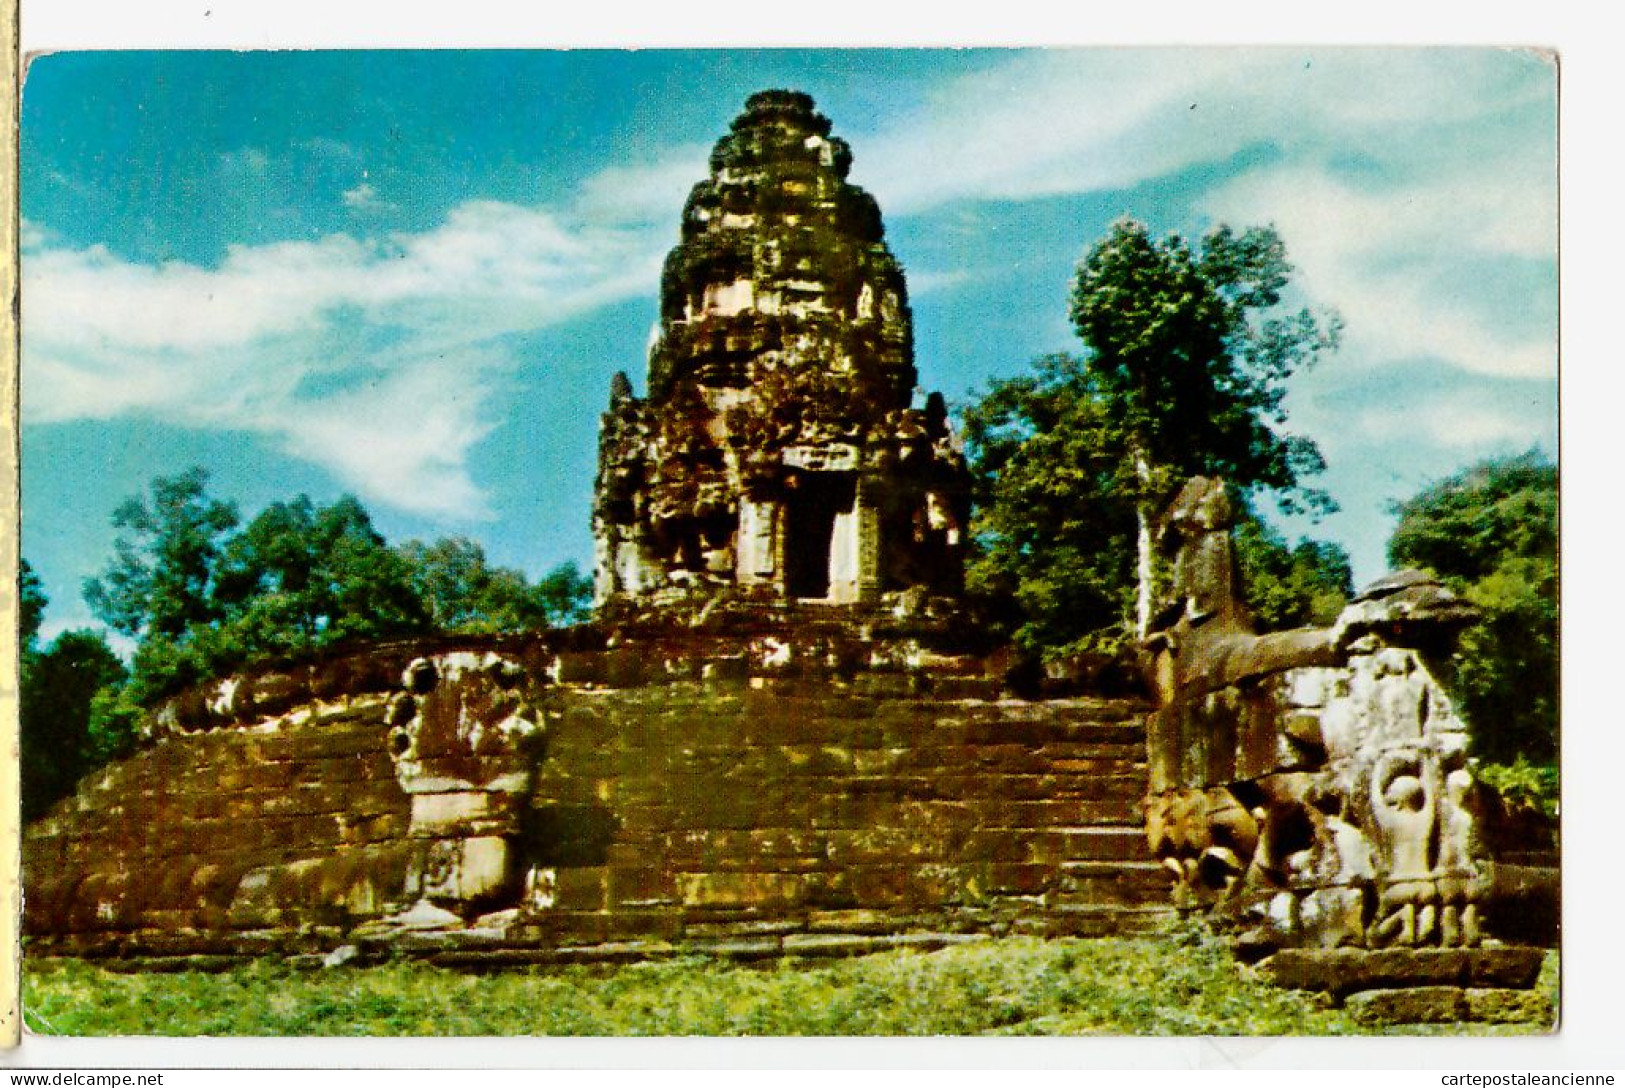 01058 ● Cambodge NEAK PEAN ANGKOR WAT CAMBODJA 1940s De SIN-KEN Chez PHA VA Kampong Chan -Hotel International PNOMPENH - Kambodscha